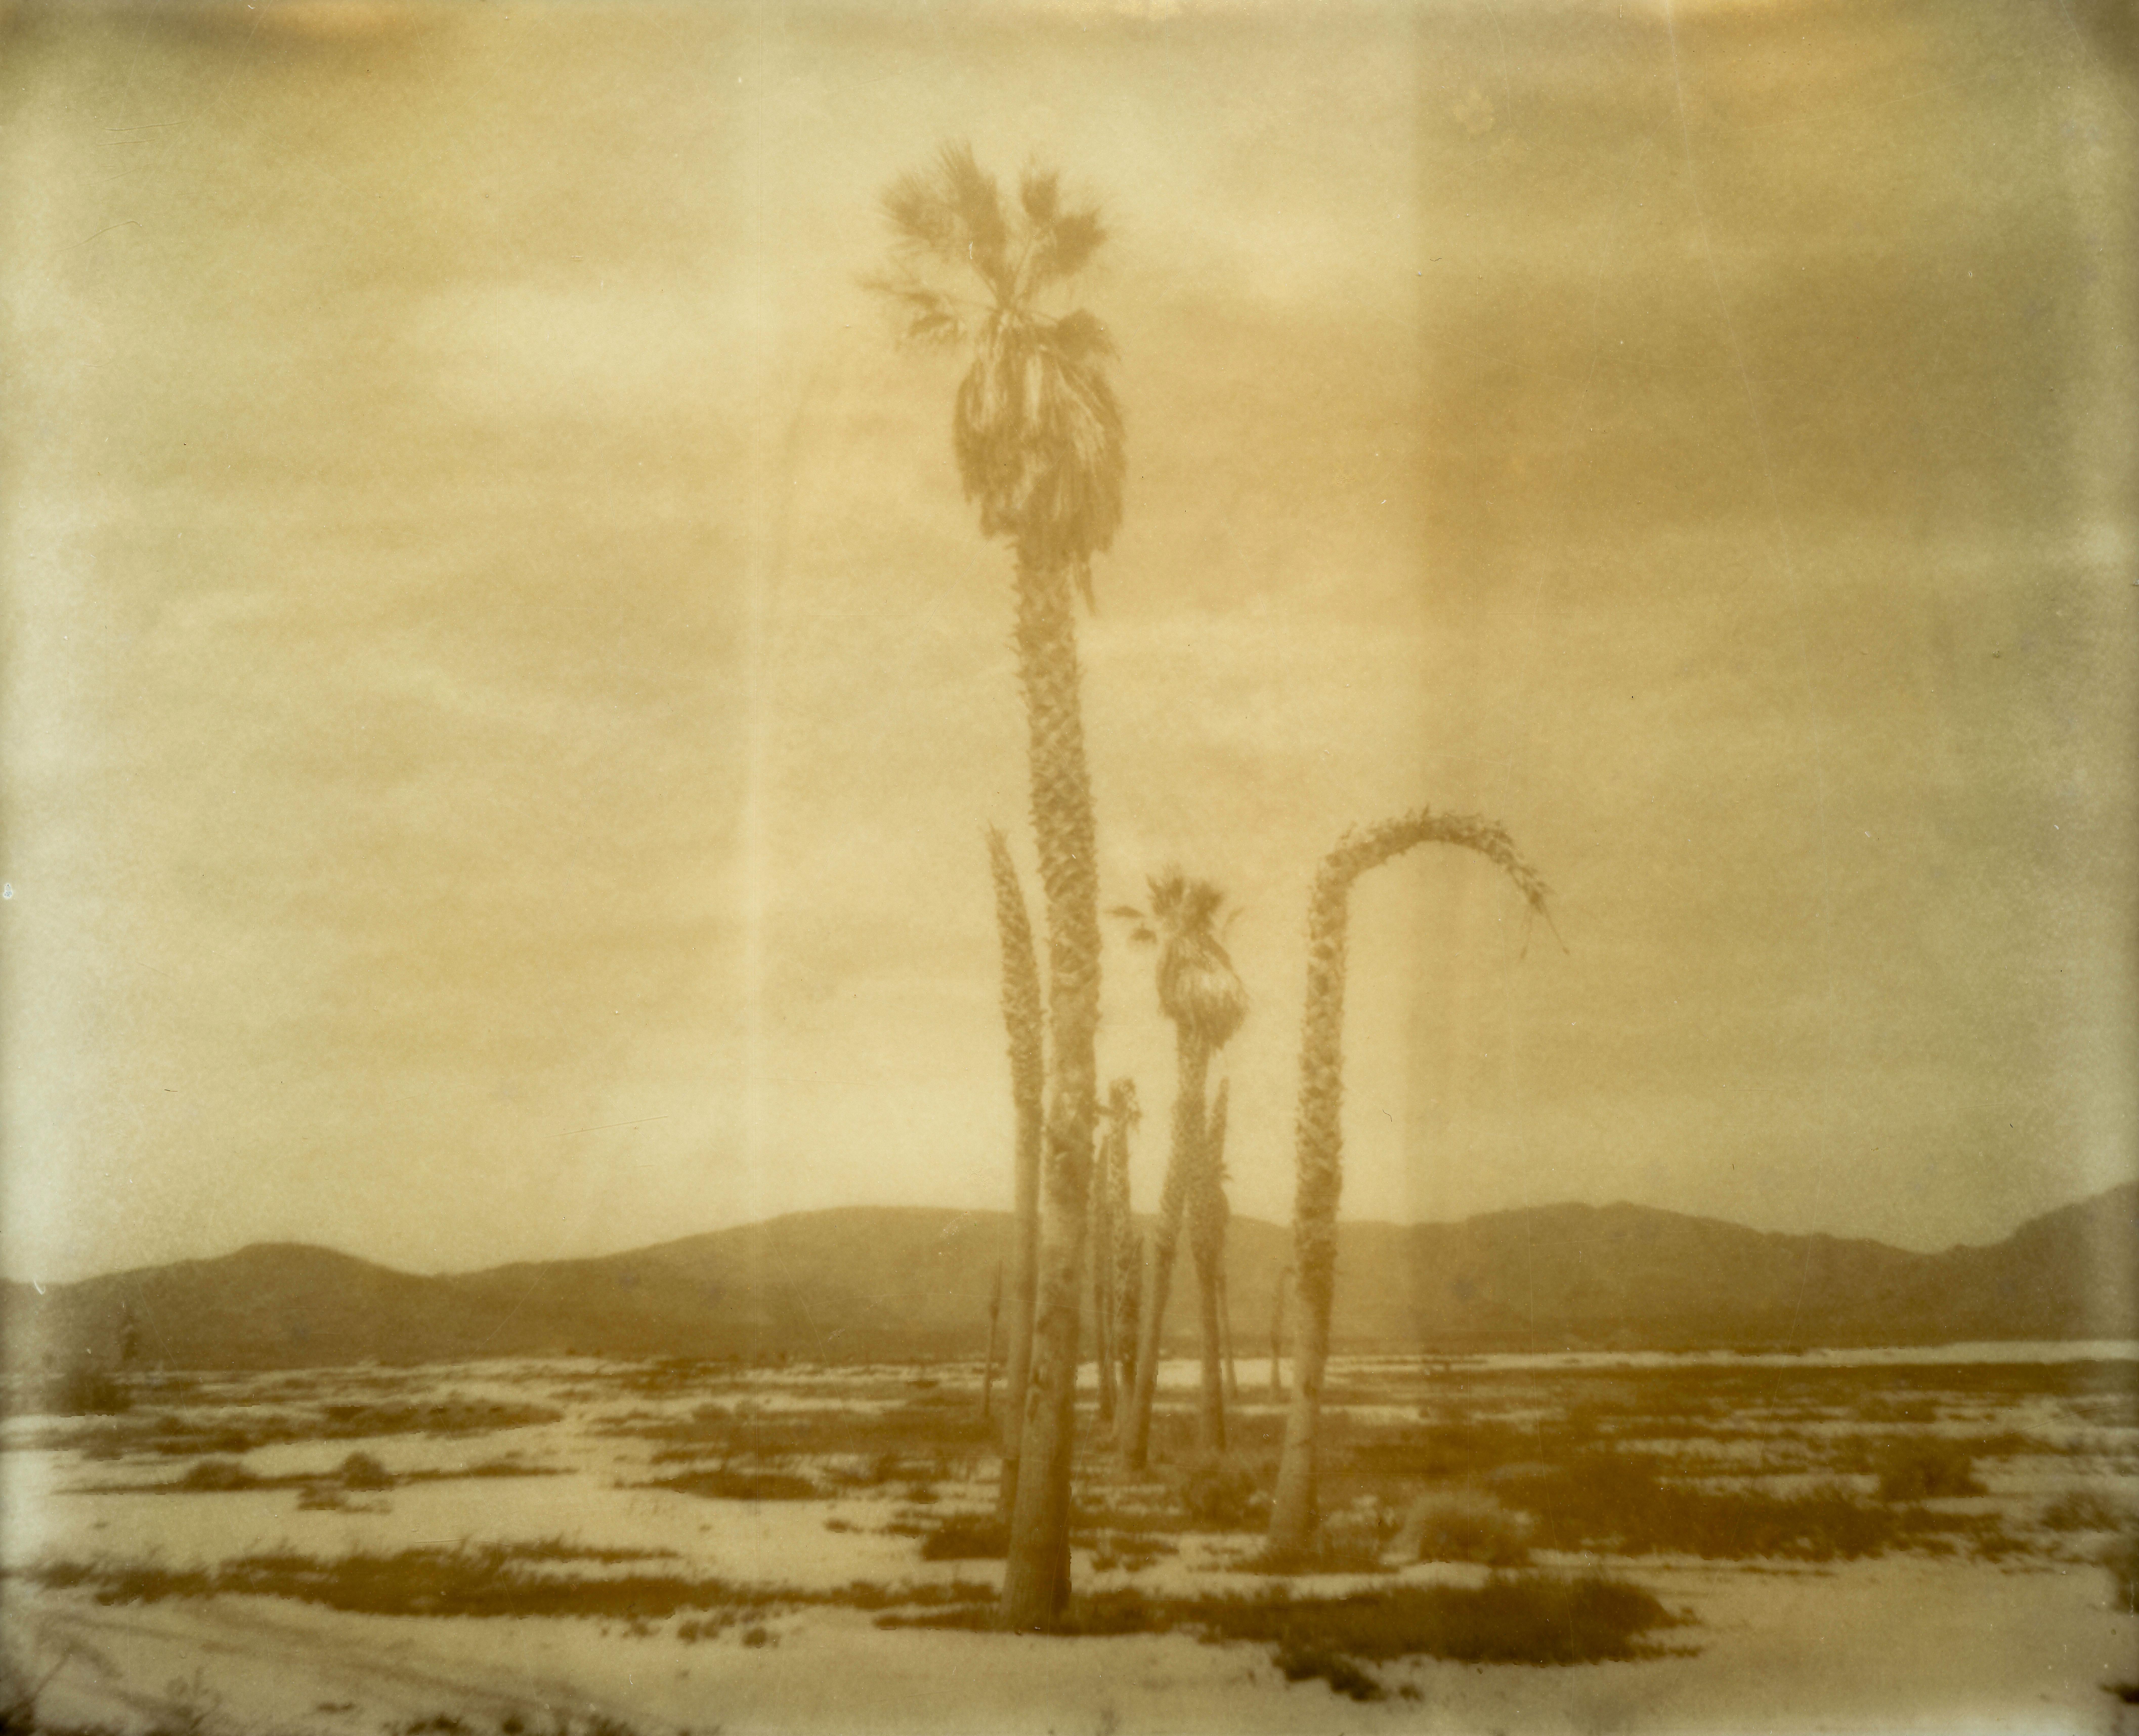 Erin Dougherty Landscape Photograph - Oasis I (The Desert in Sepia) - 21st Century, Polaroid, Landscape